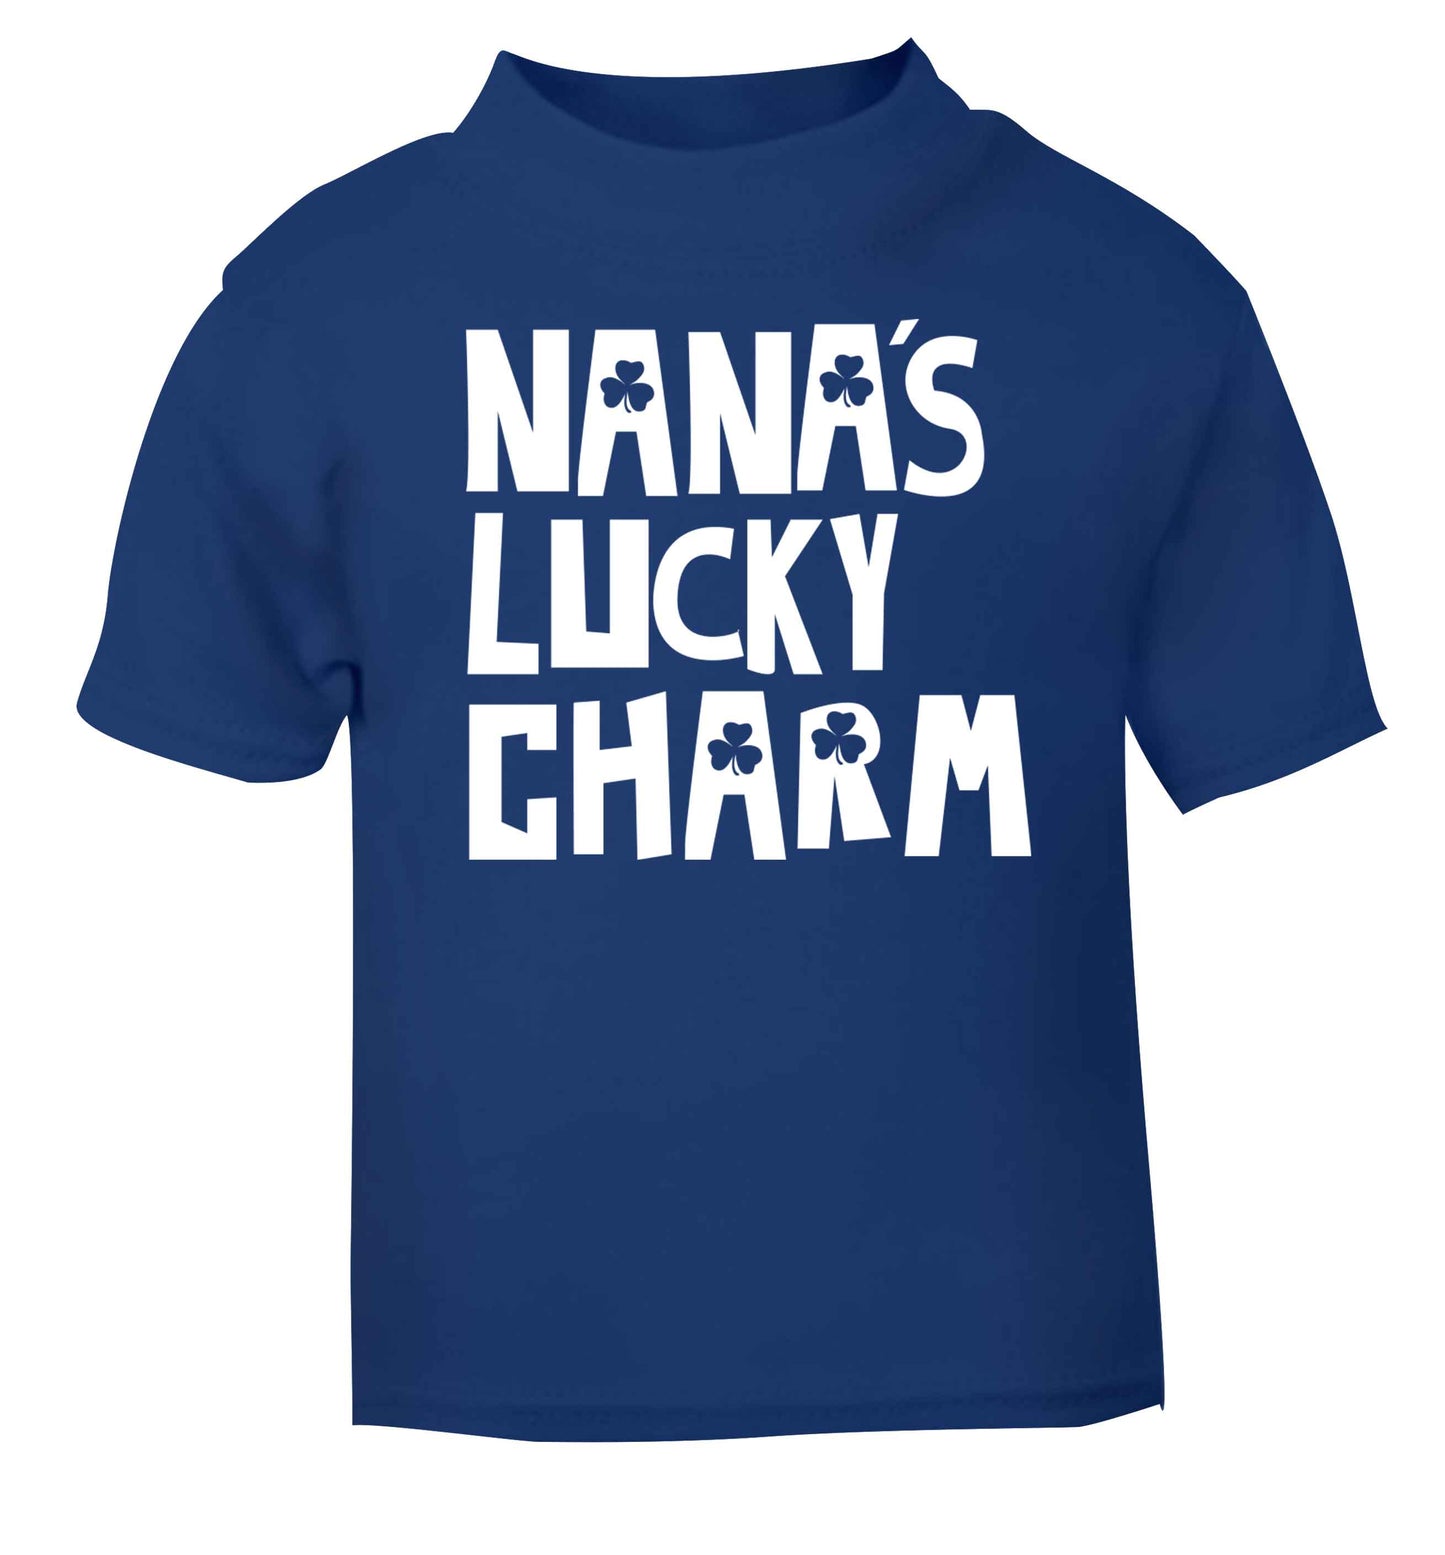 Nana's lucky charm blue baby toddler Tshirt 2 Years